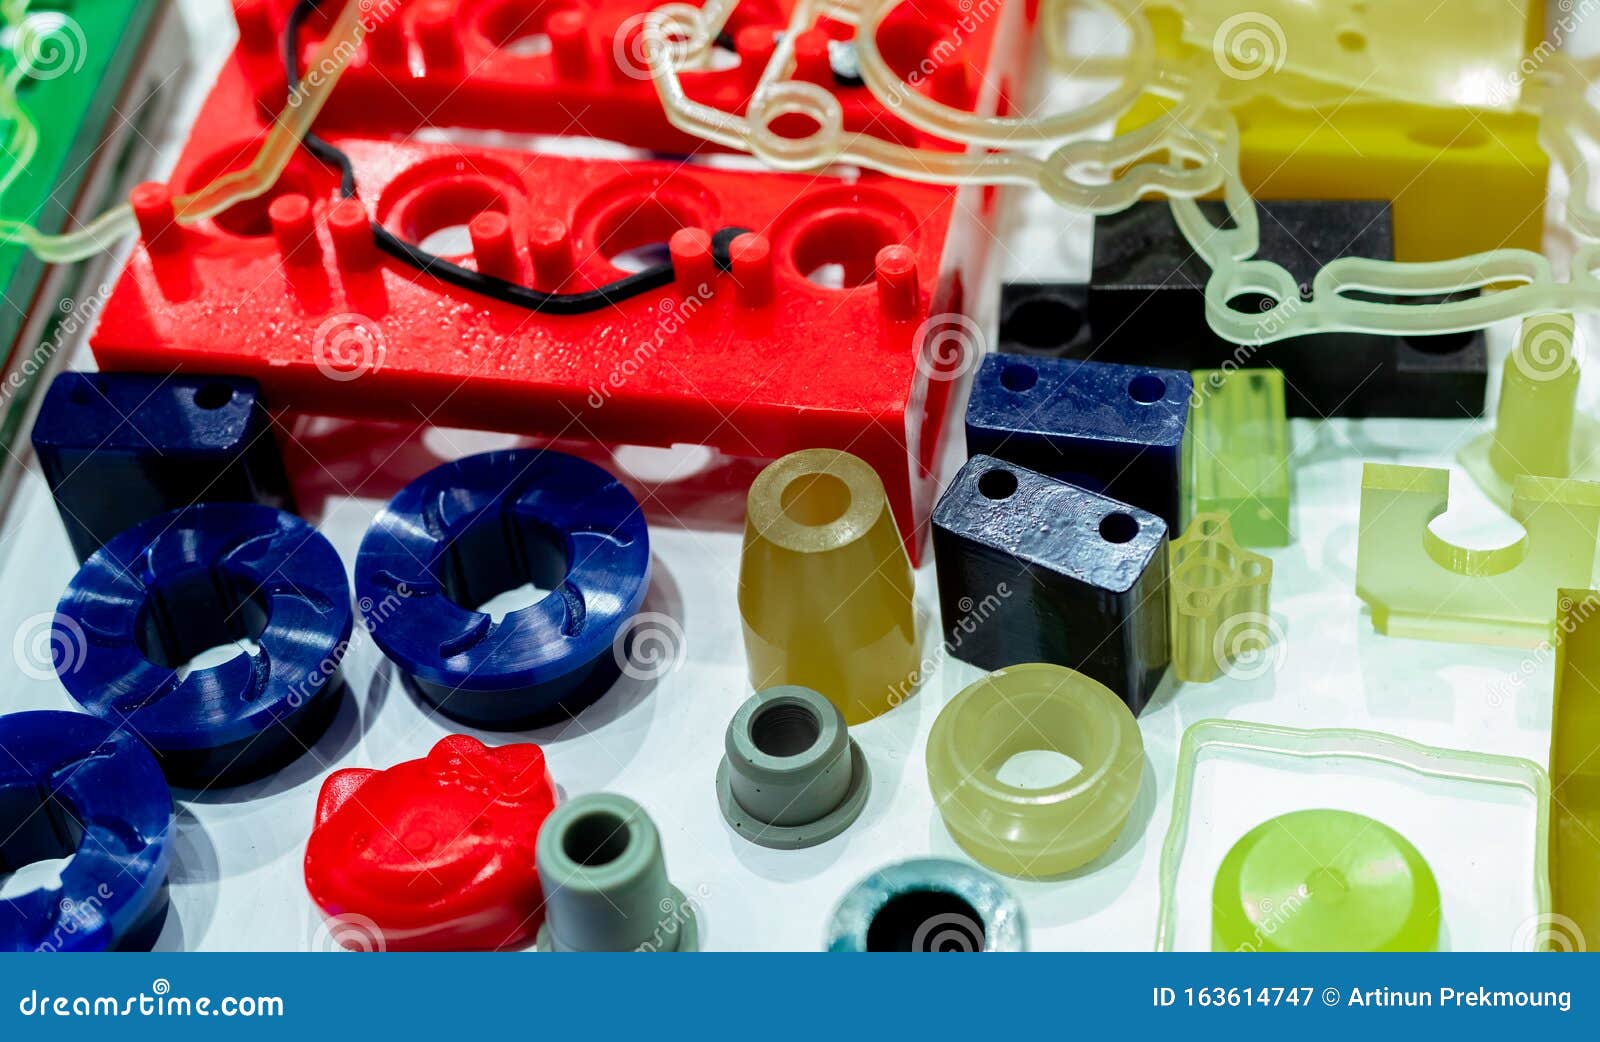 engineering plastics. plastic material used in manufacturing industry. global engineering plastic market concept. polyurethane